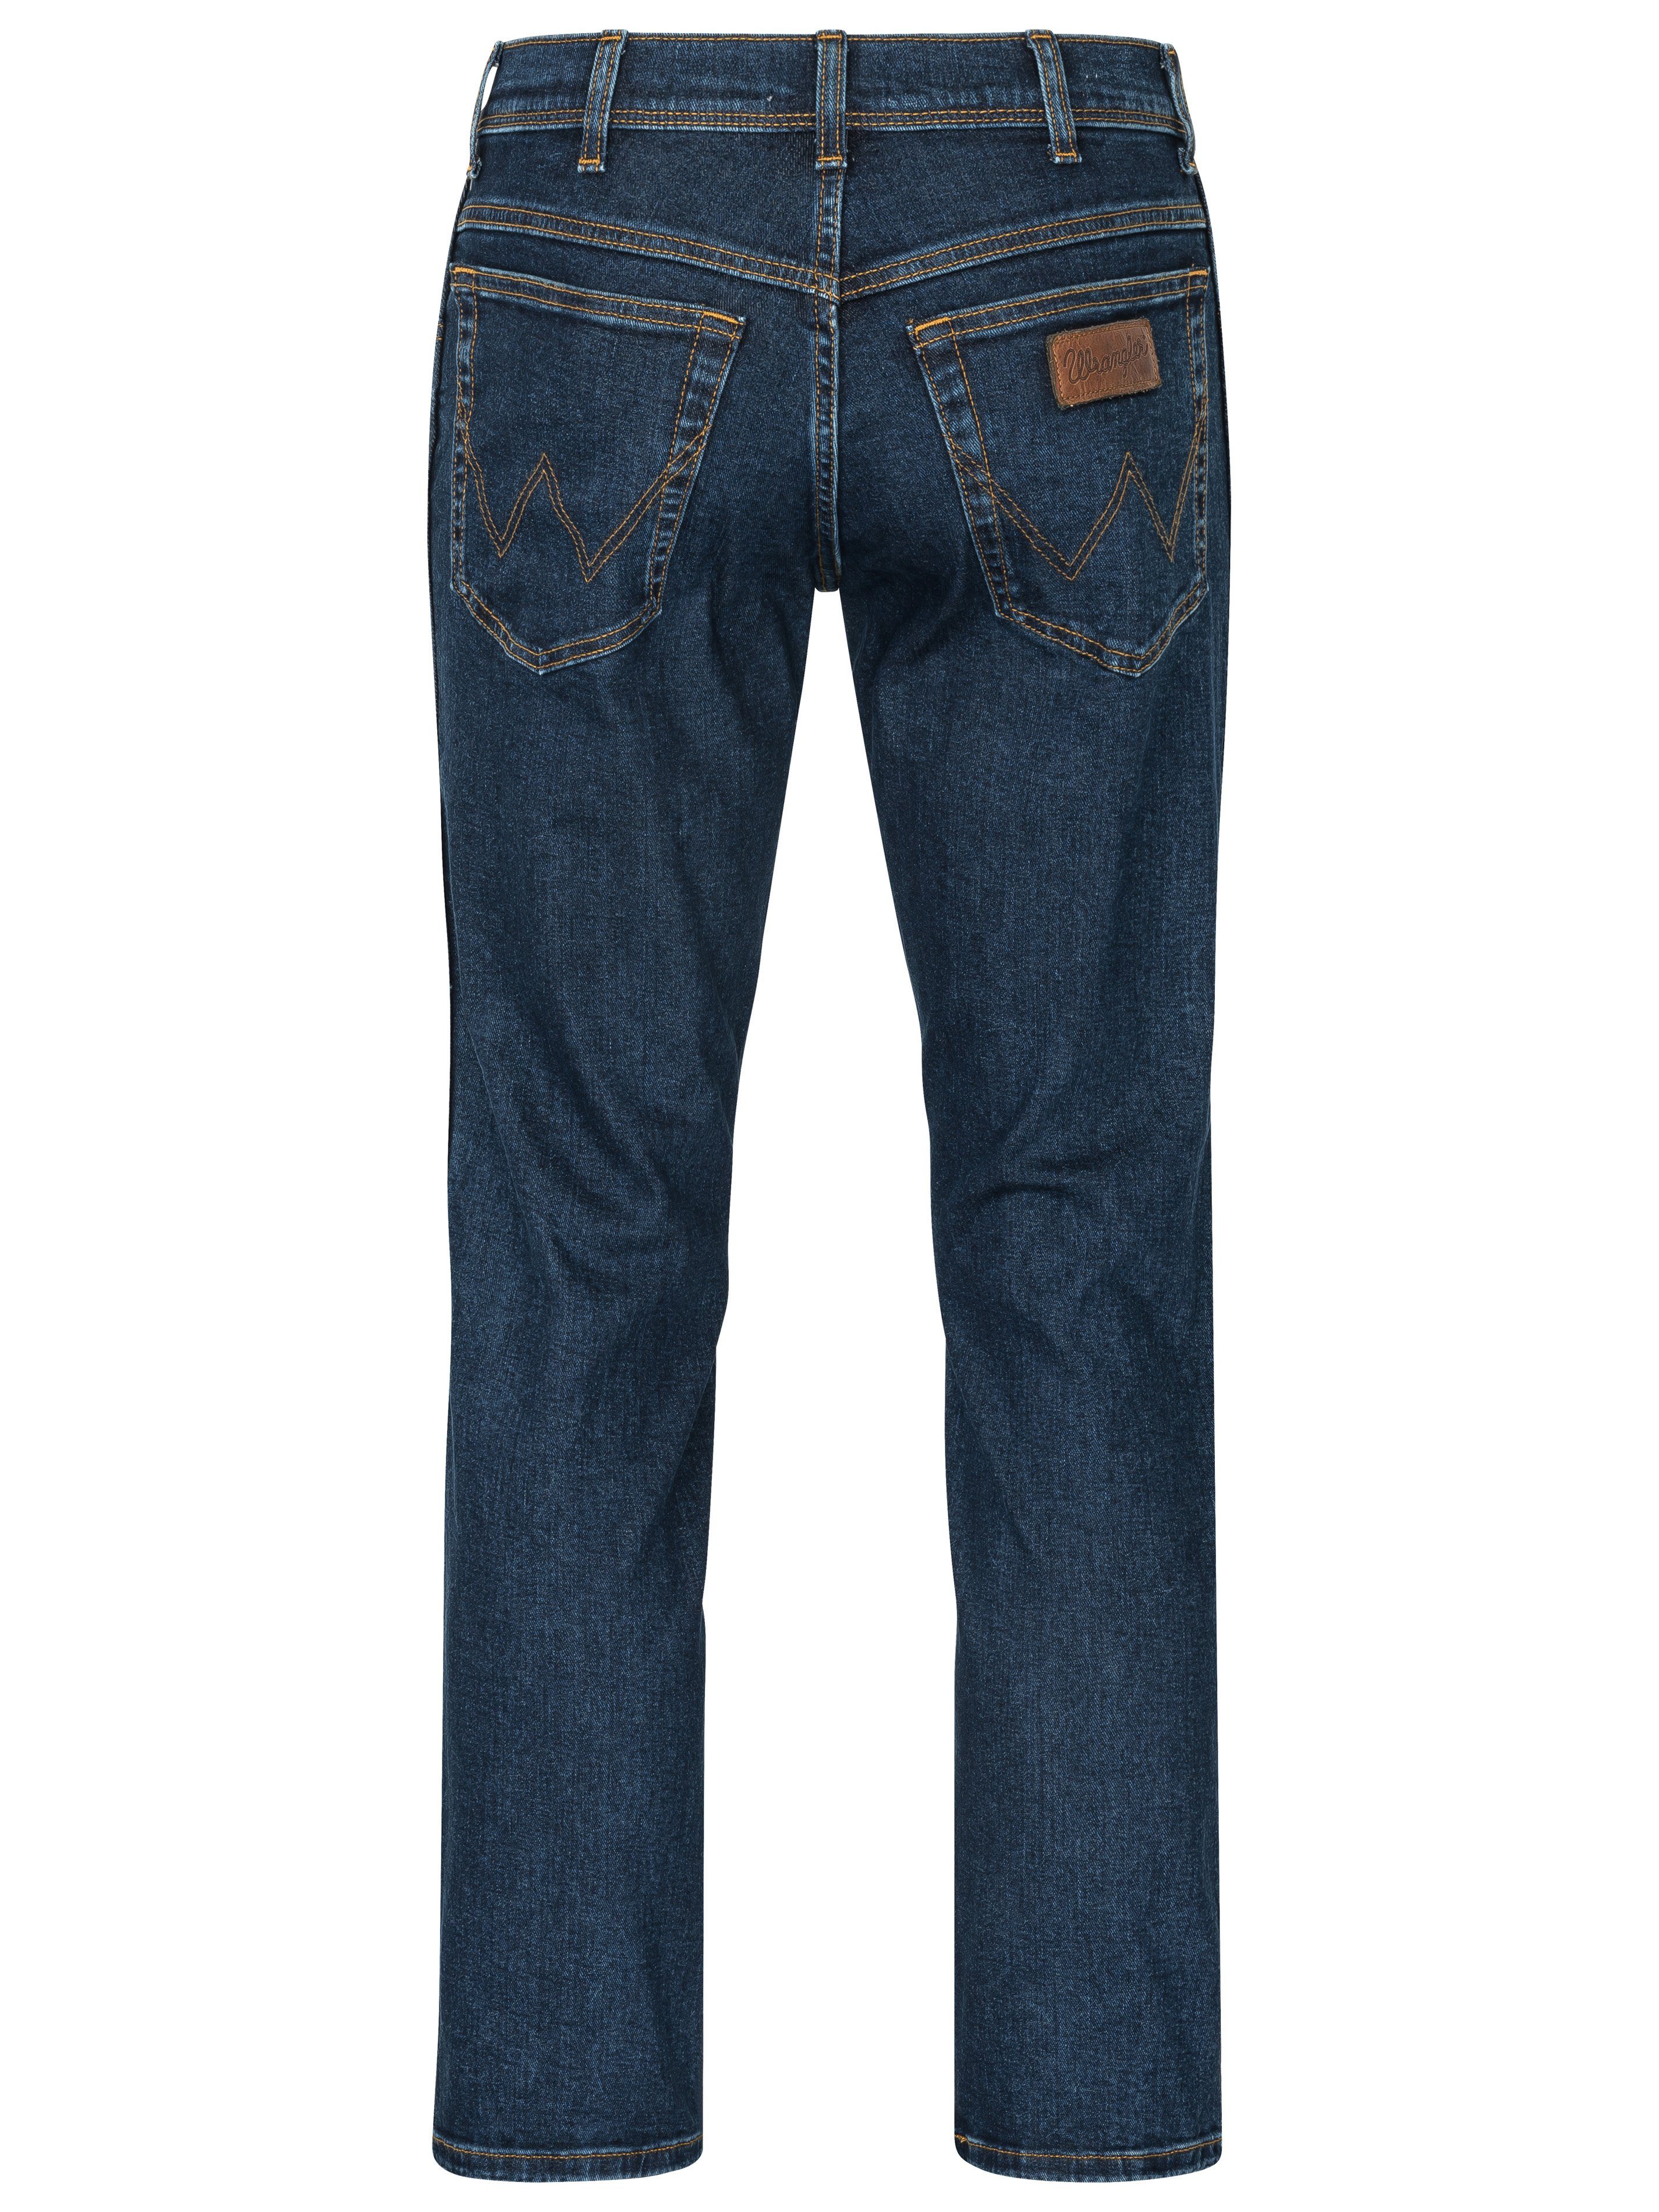 Stretch schwarzer Jeans Gürtel Authentic Wrangler Darkstone Straight mit Straight-Jeans Gürtel Herrenjeans Texas +